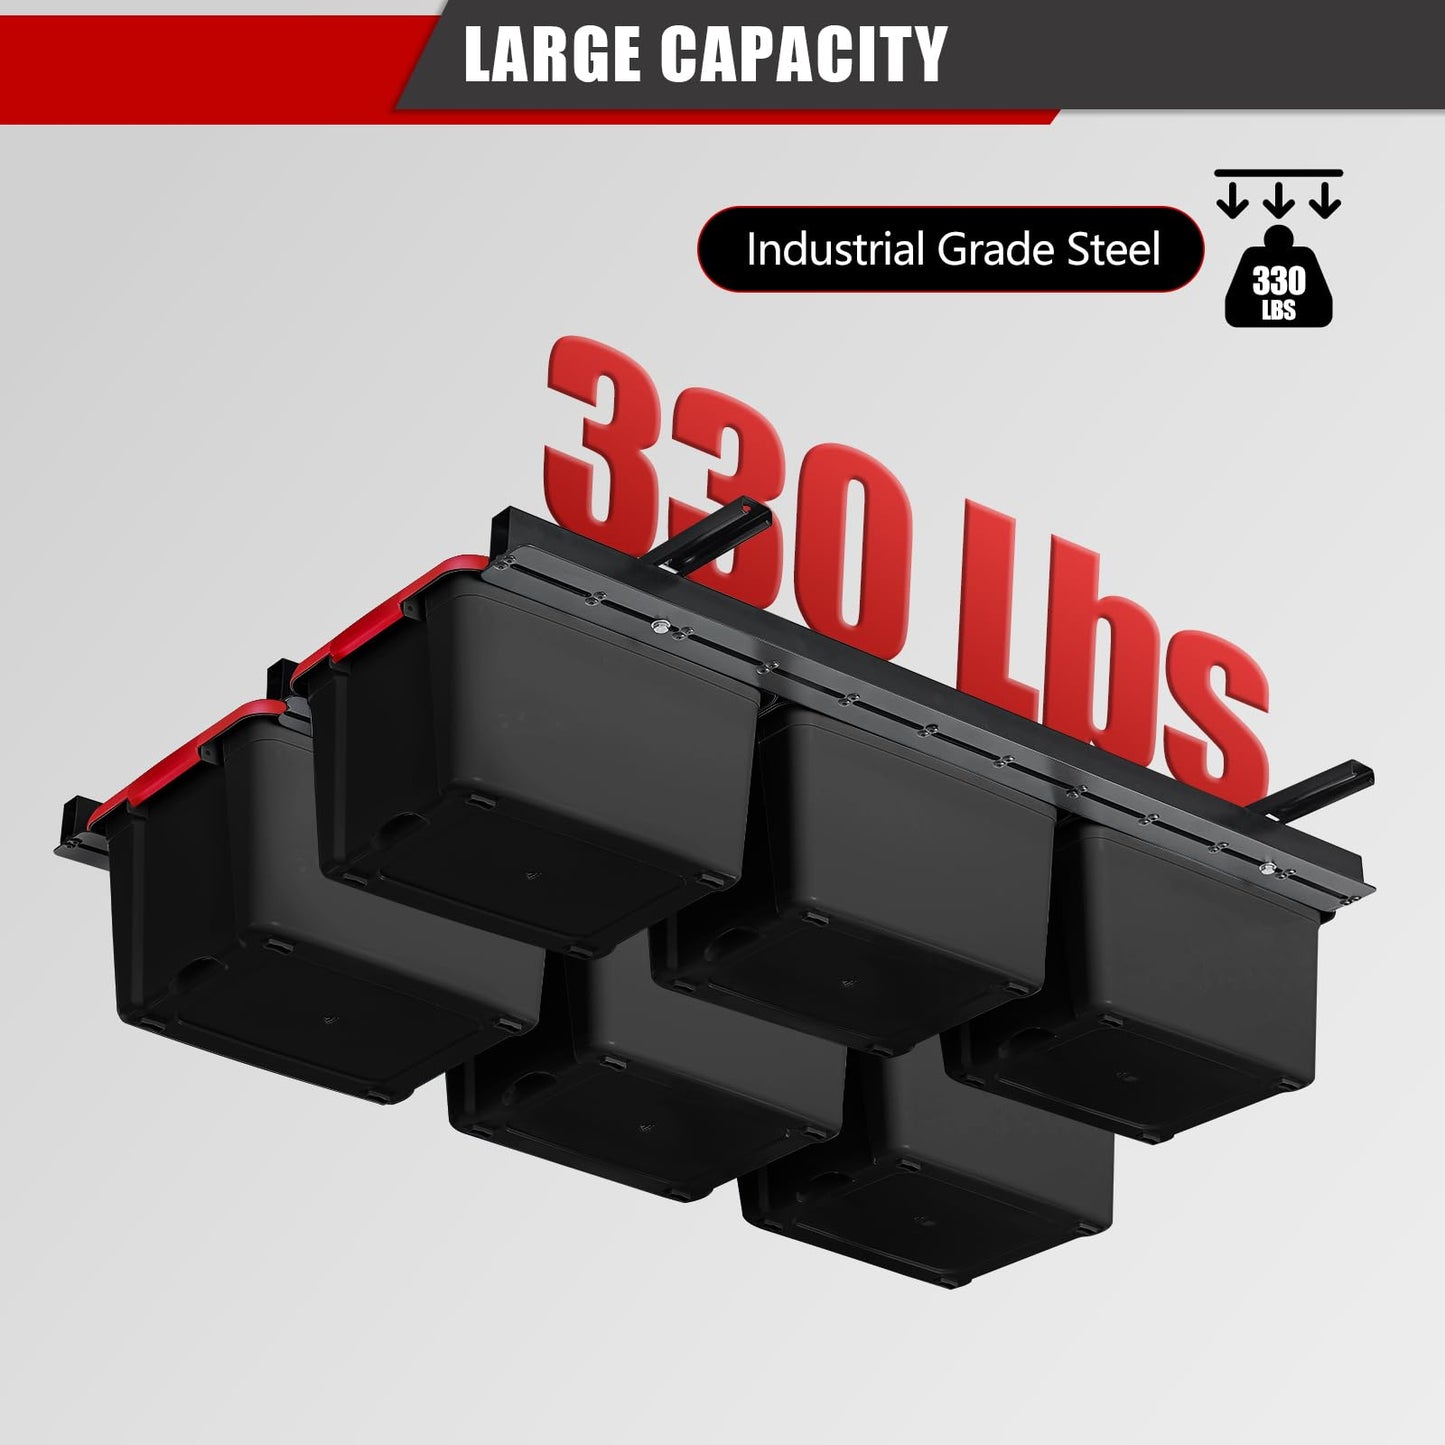 Ultrawall Ceiling Storage Rack, 48.4" x 48.4" Adjustable Garage Overhead Bin Rack for Container, Heavy Duty Metal Storage Tote Organization System,